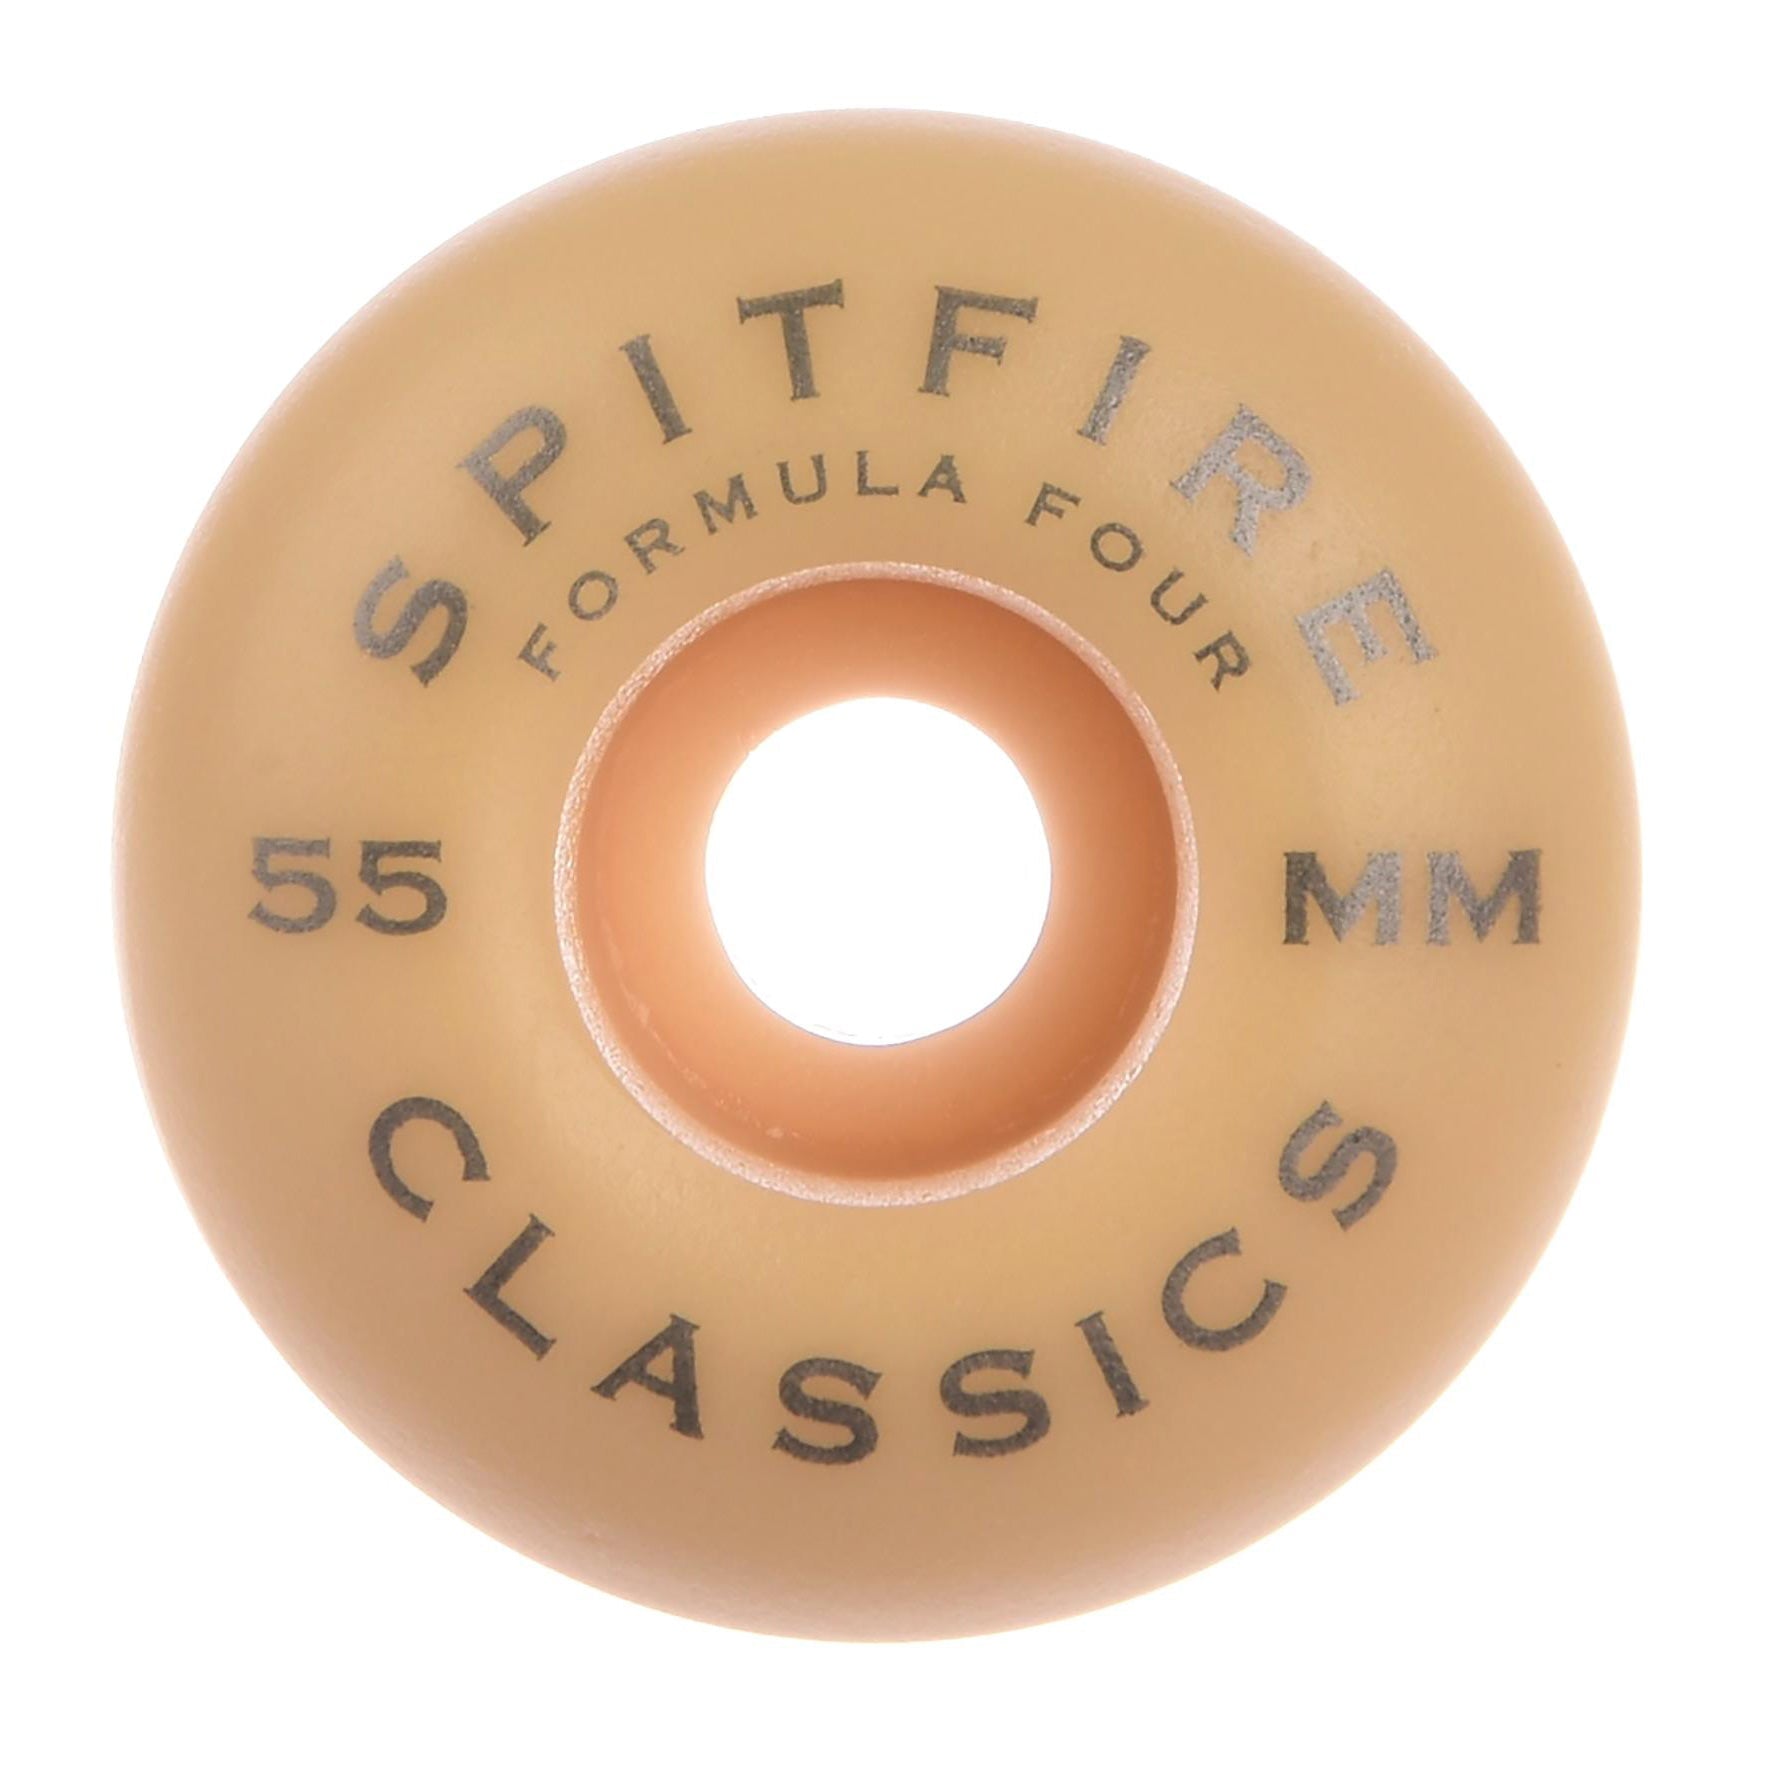 Spitfire Wheels Formular Four Classic 99Duro - 55mm Rollen Spitfire Wheels 